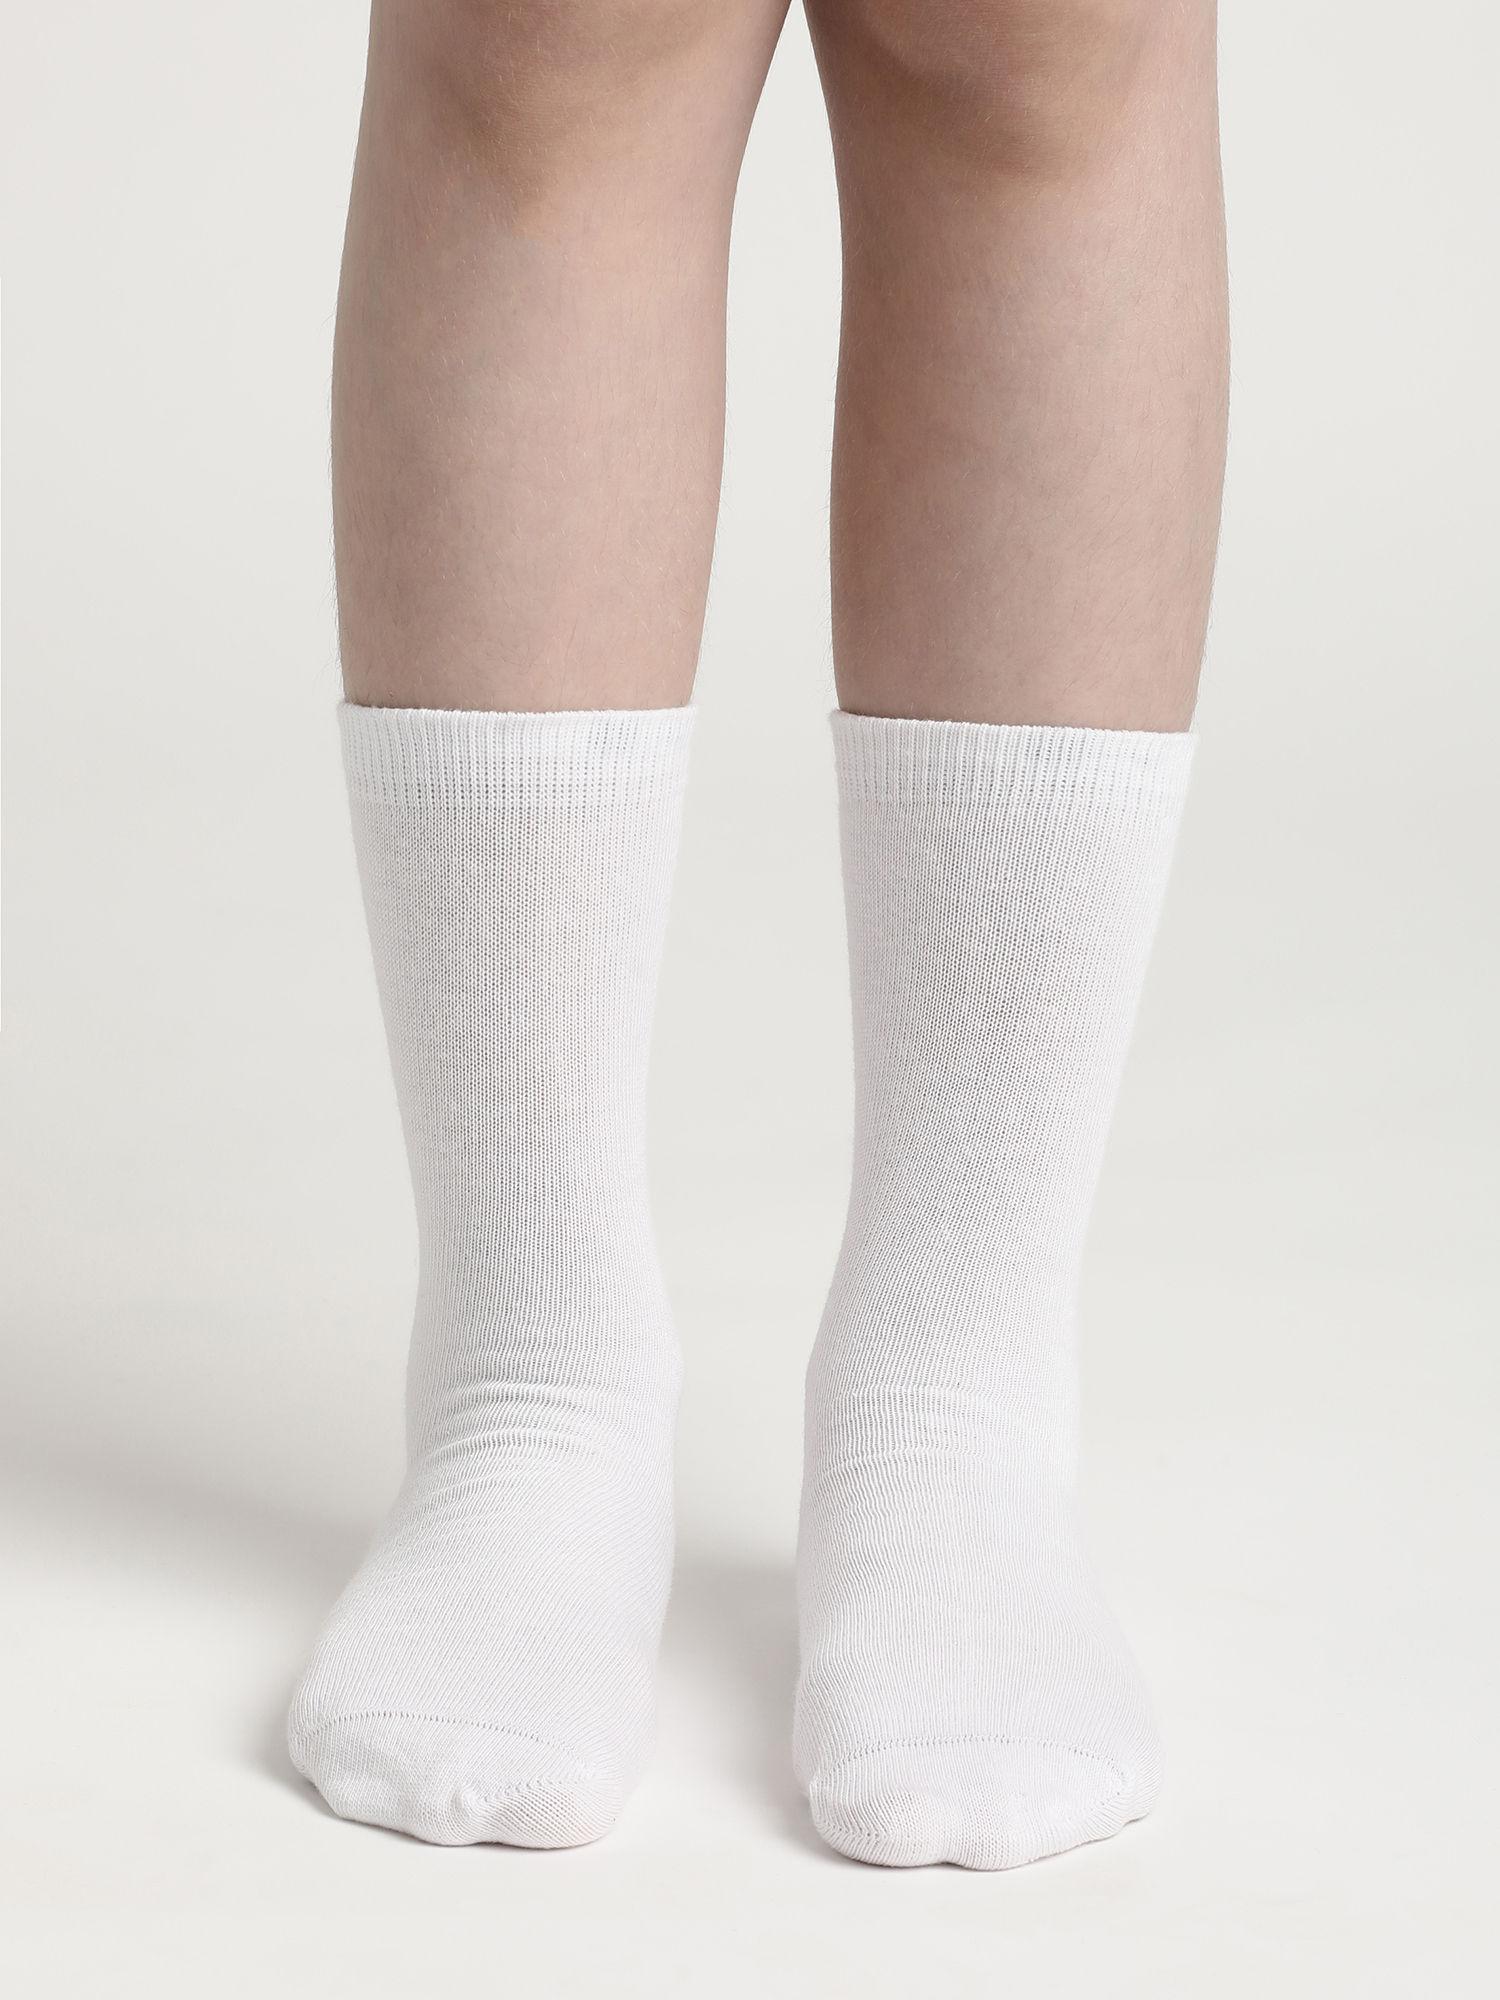 7800-unisex-cotton-nylon-stretch-calf-length-socks---white